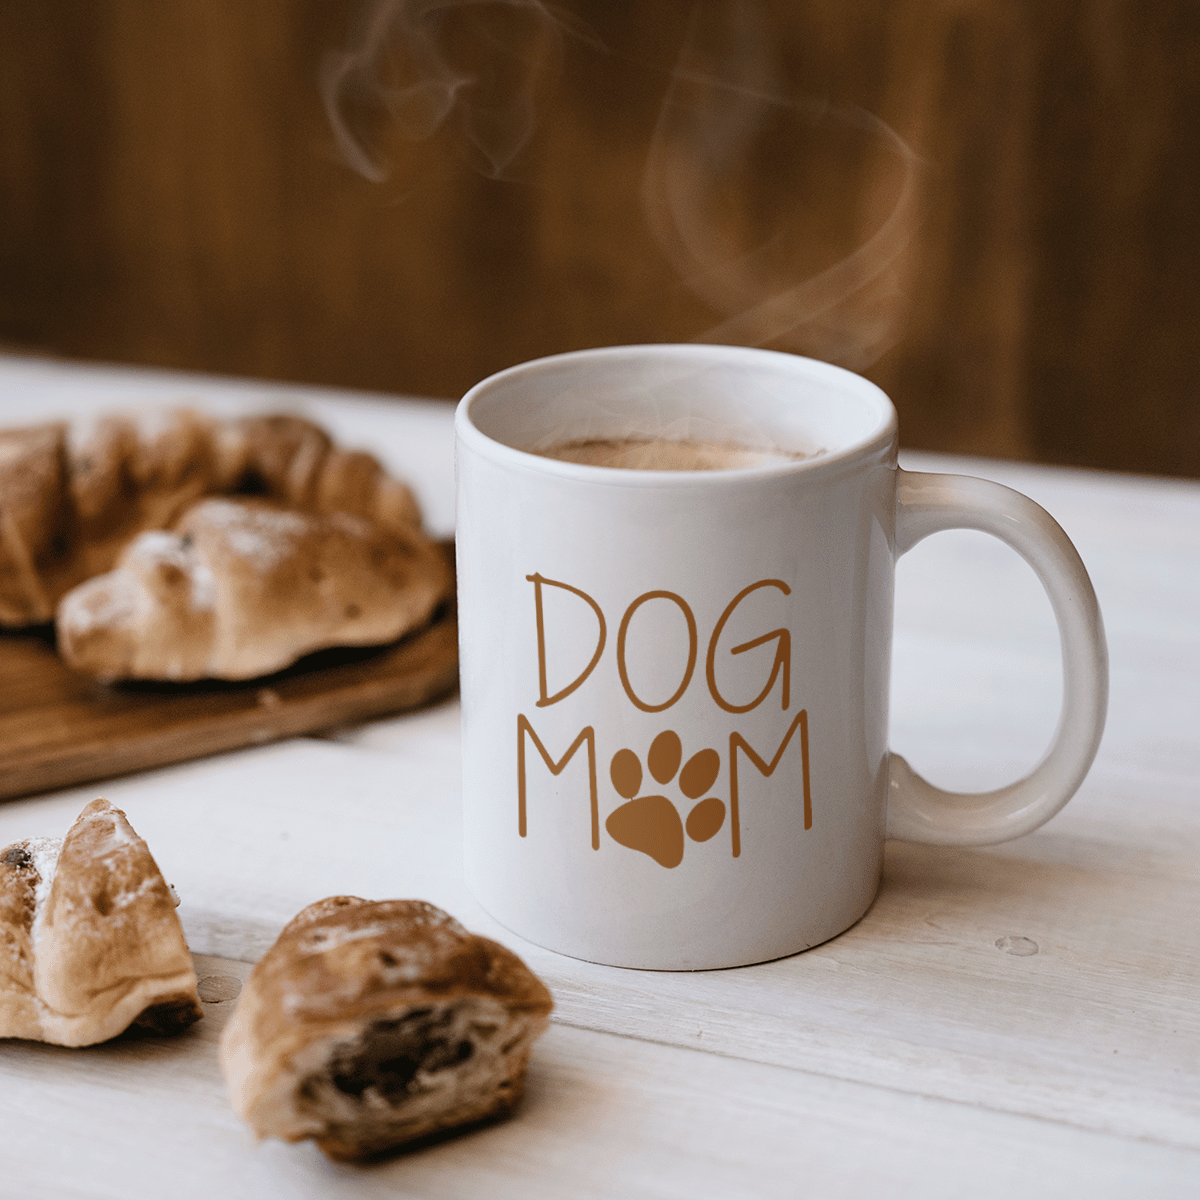 Funny Dog Mom Gift Best Fucking Dog Mom Ever Coffee Mug Tea Cup